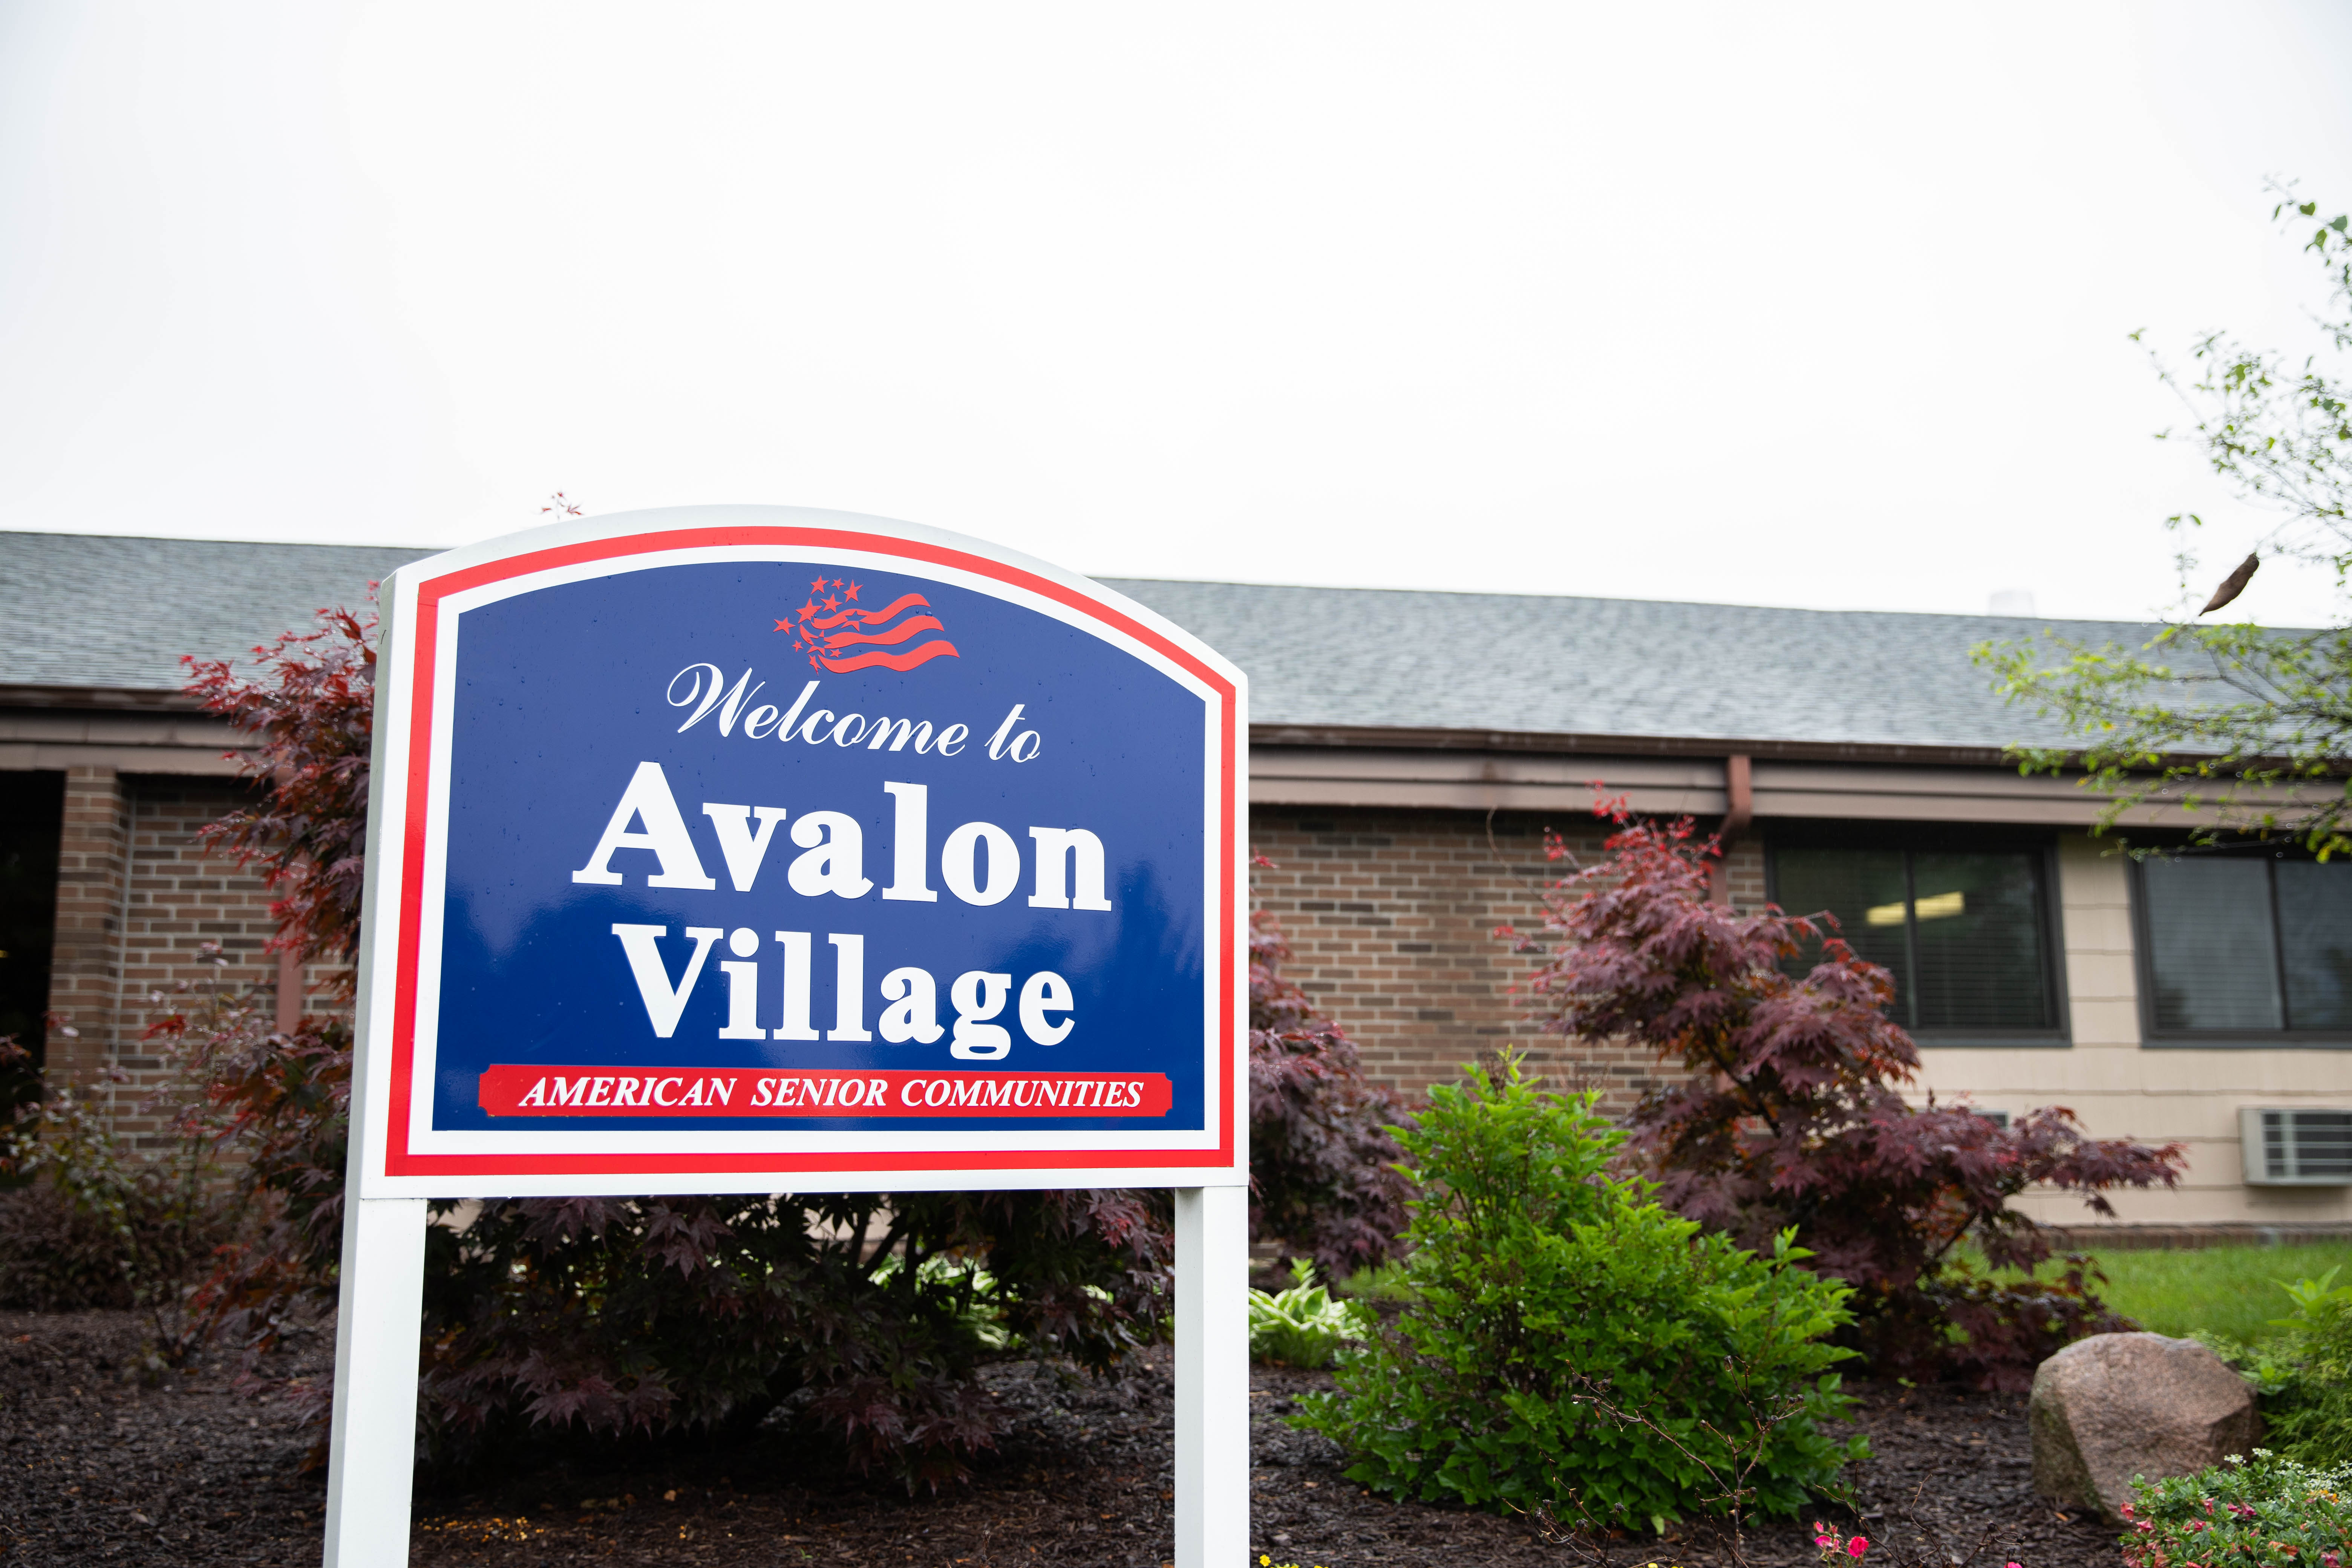 Avalon Village image